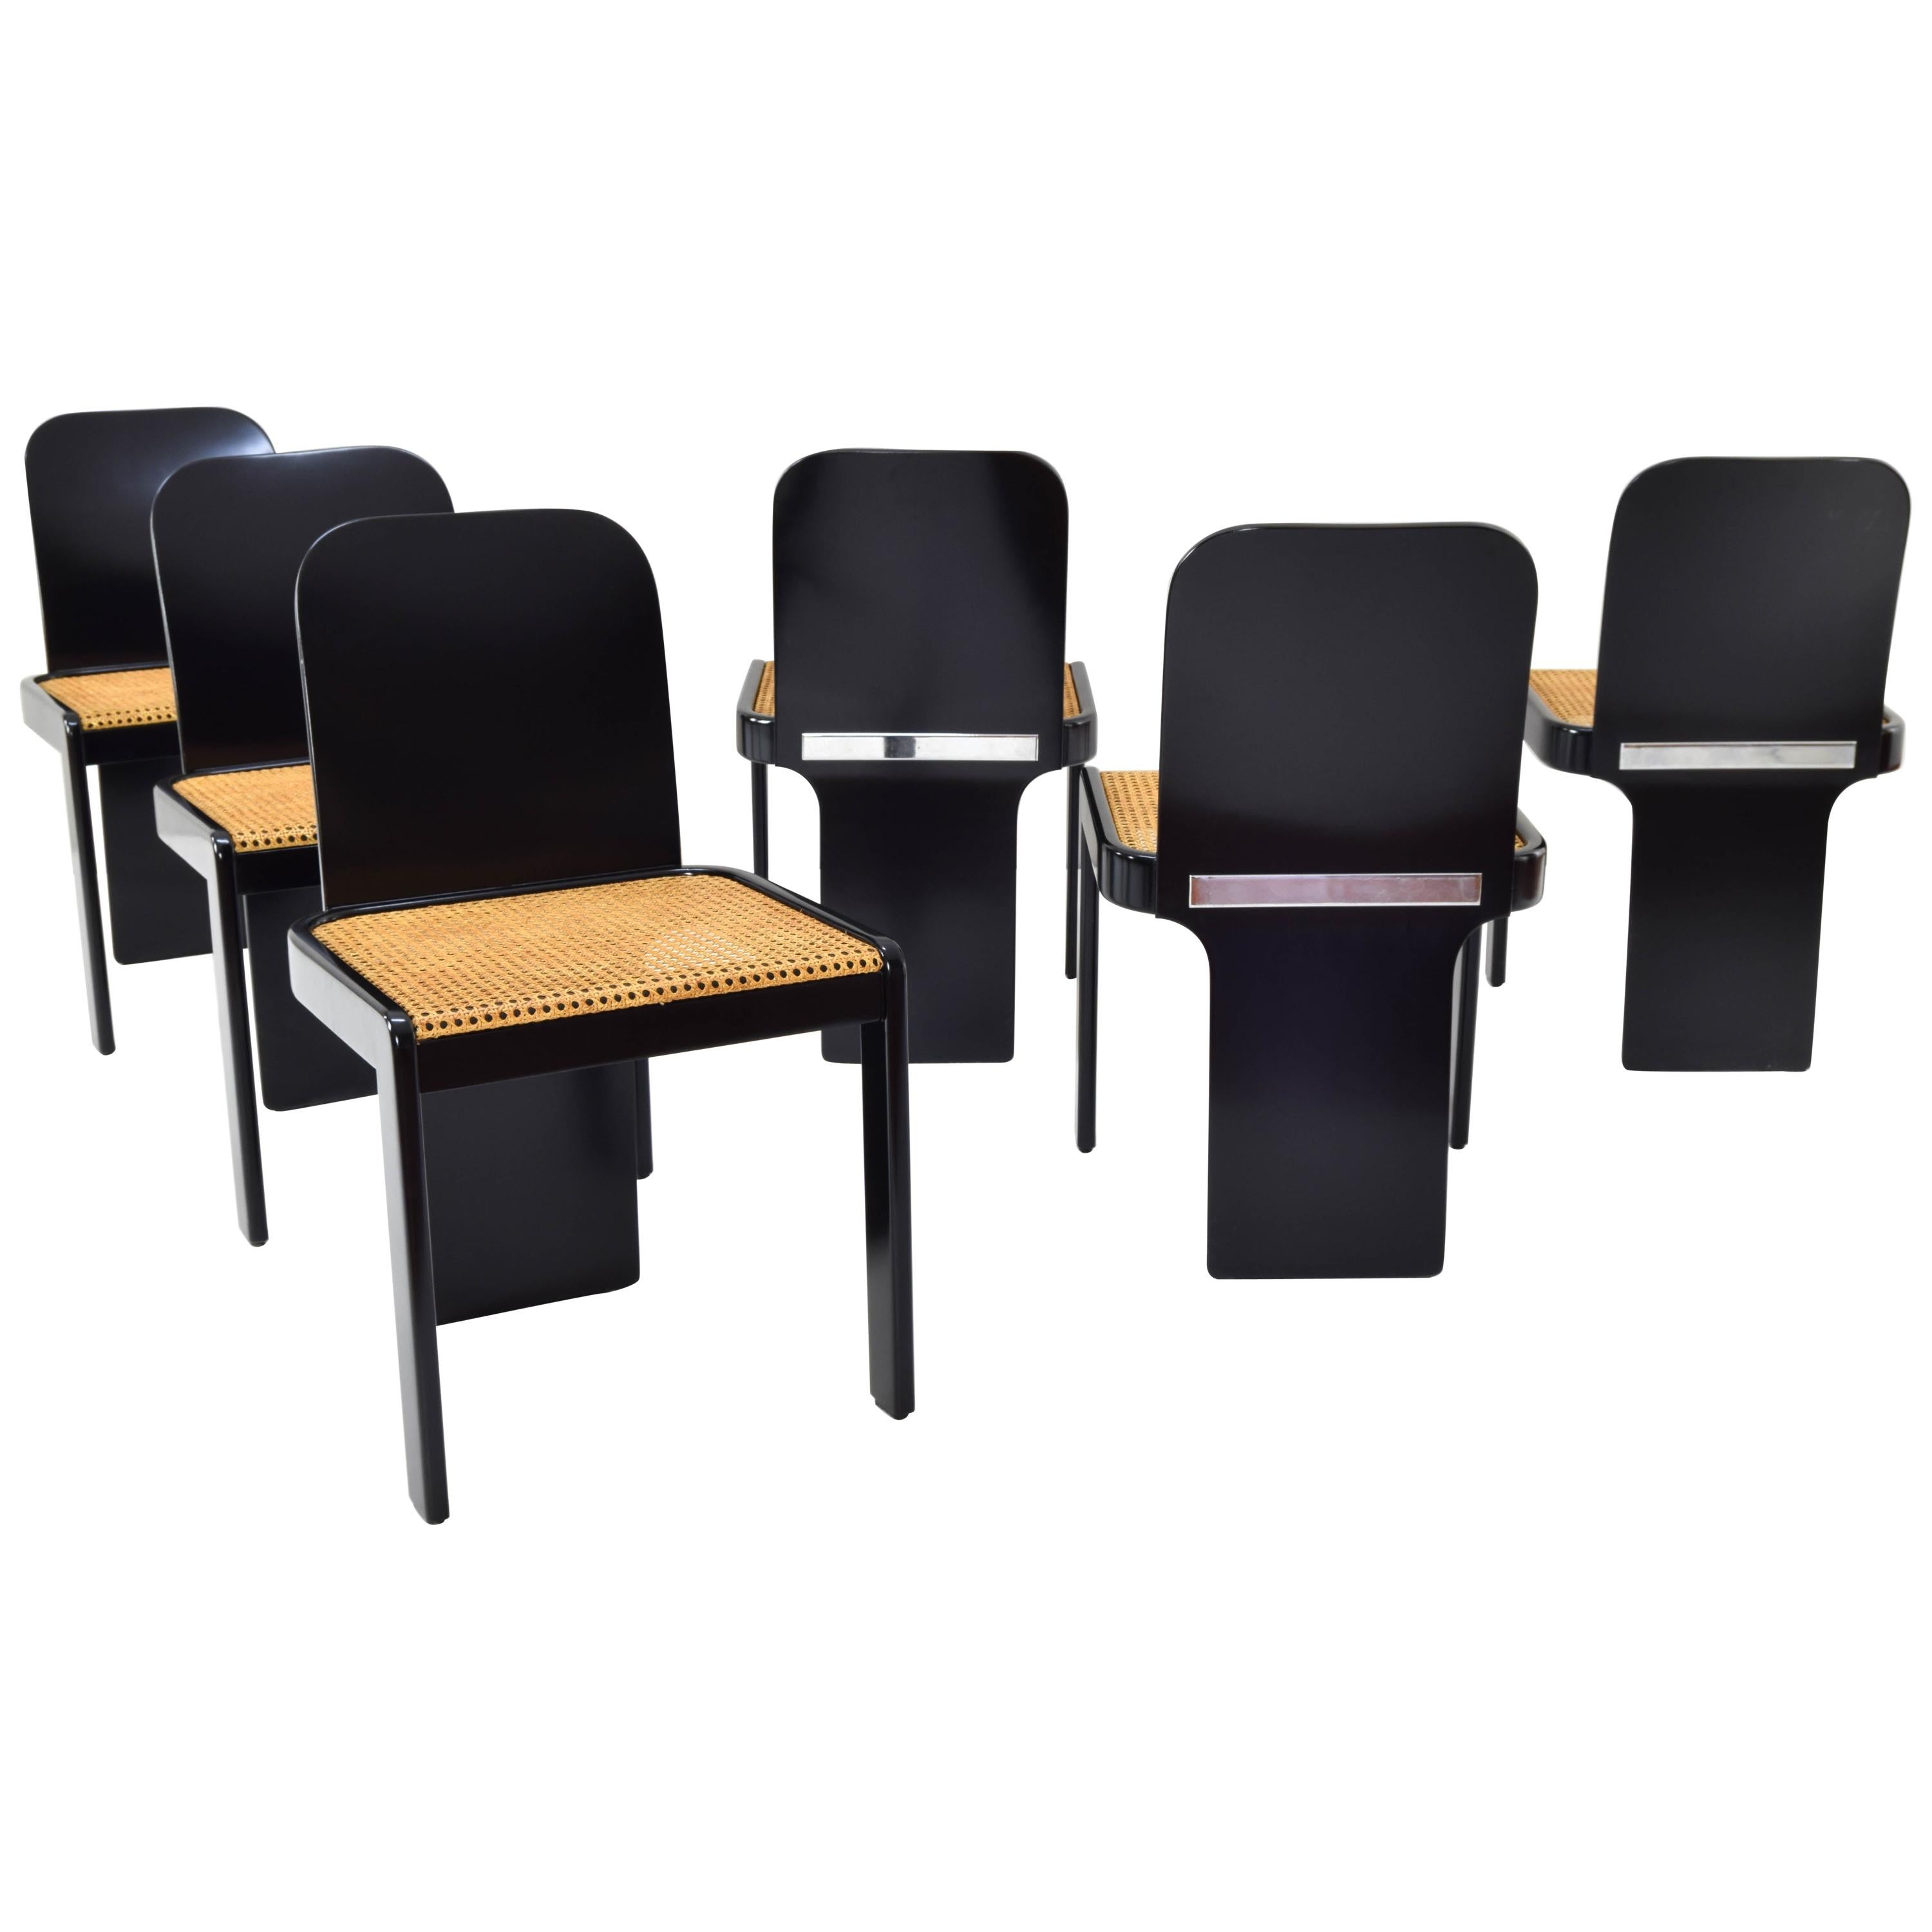 Set of Six Mid Century Italian Modern Chairs by P. Molinari for Pozzi Milano 70s